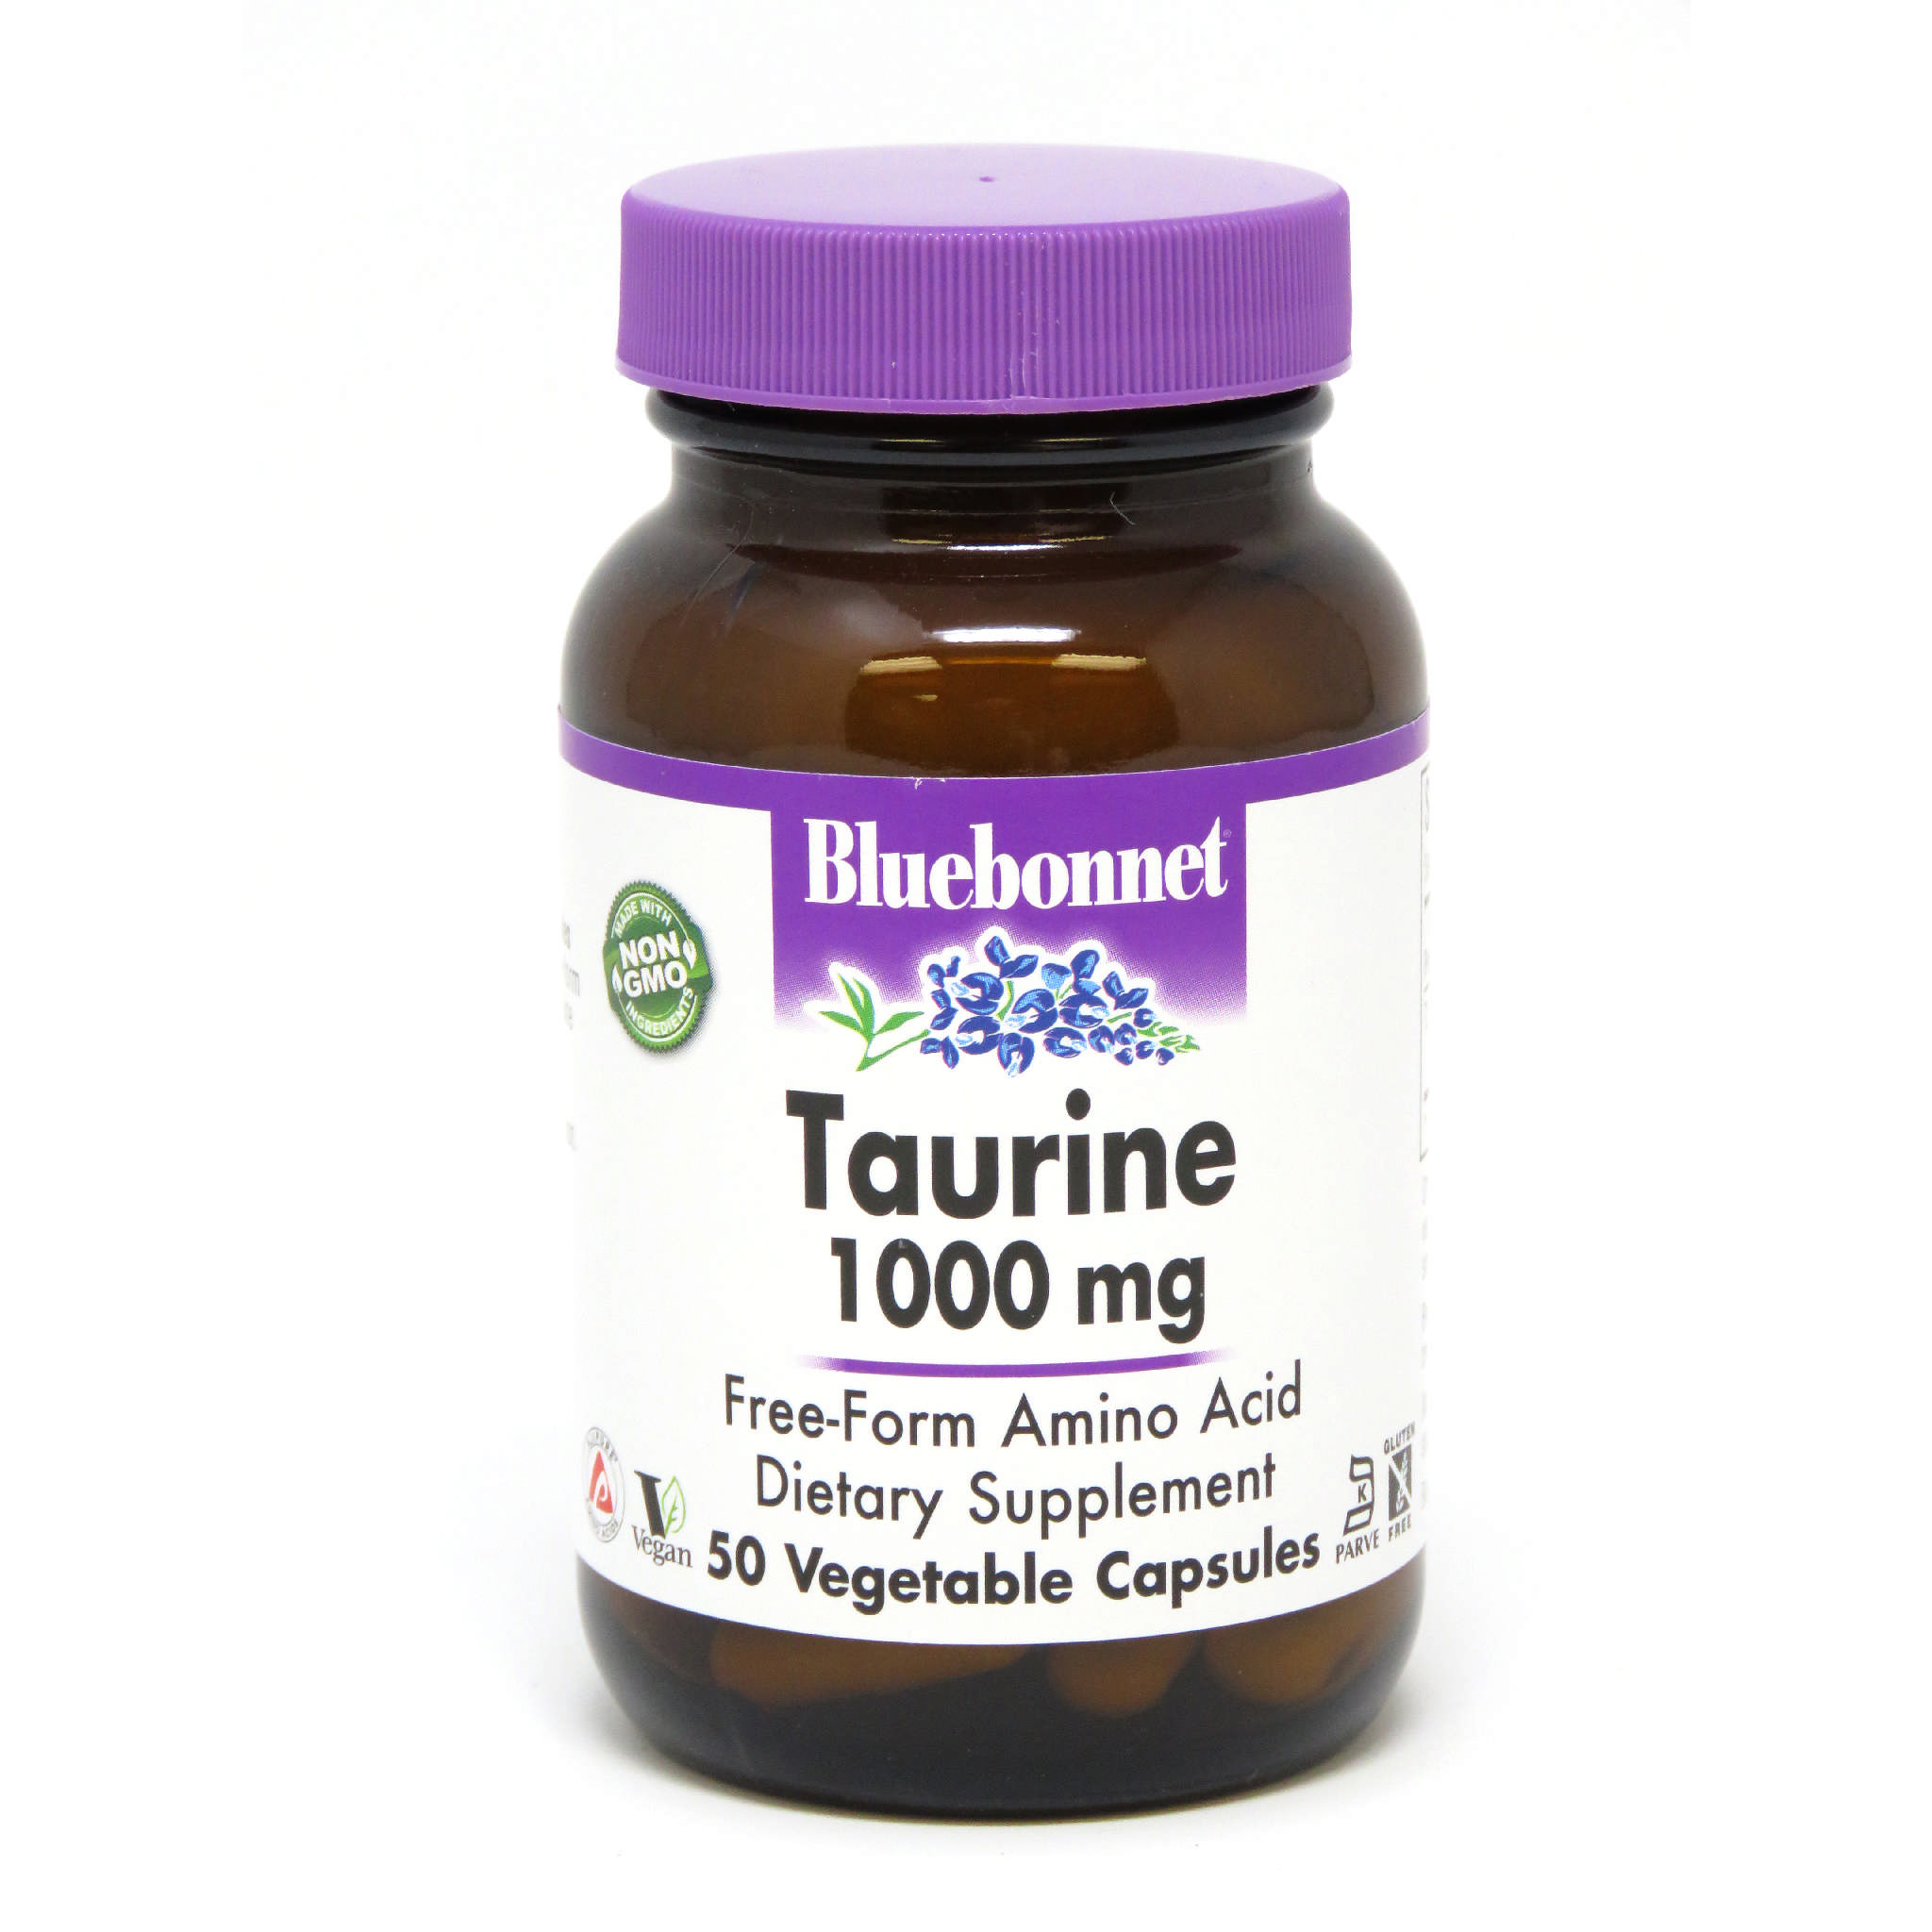 Bluebonnet - Taurine 1000 mg